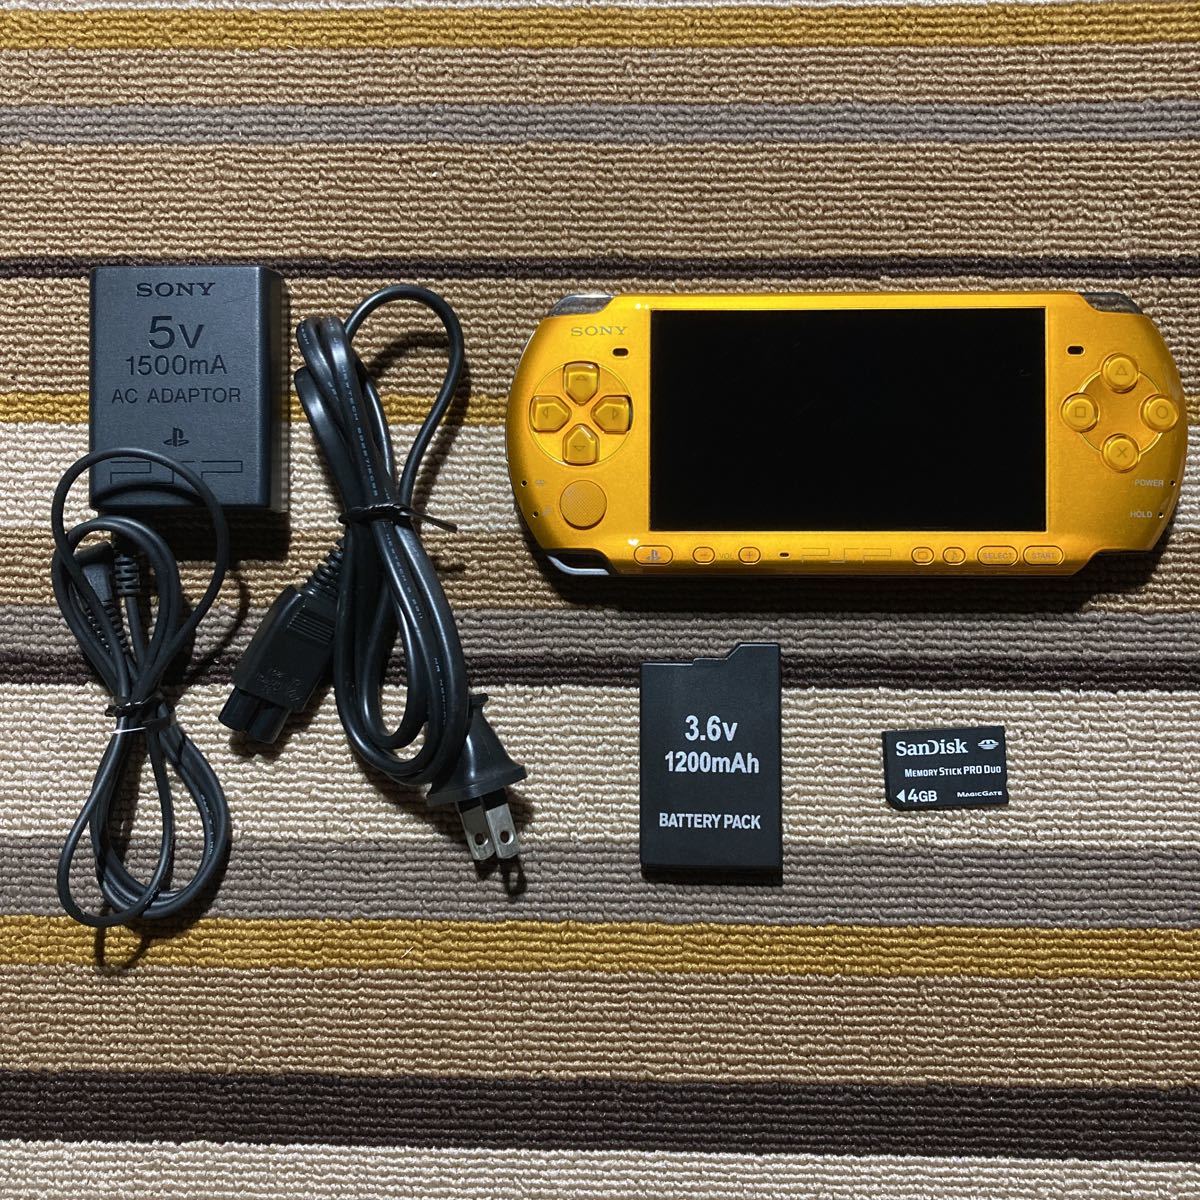 PSP「プレイステーション・ポータブル」 ブライト・イエロー (PSP